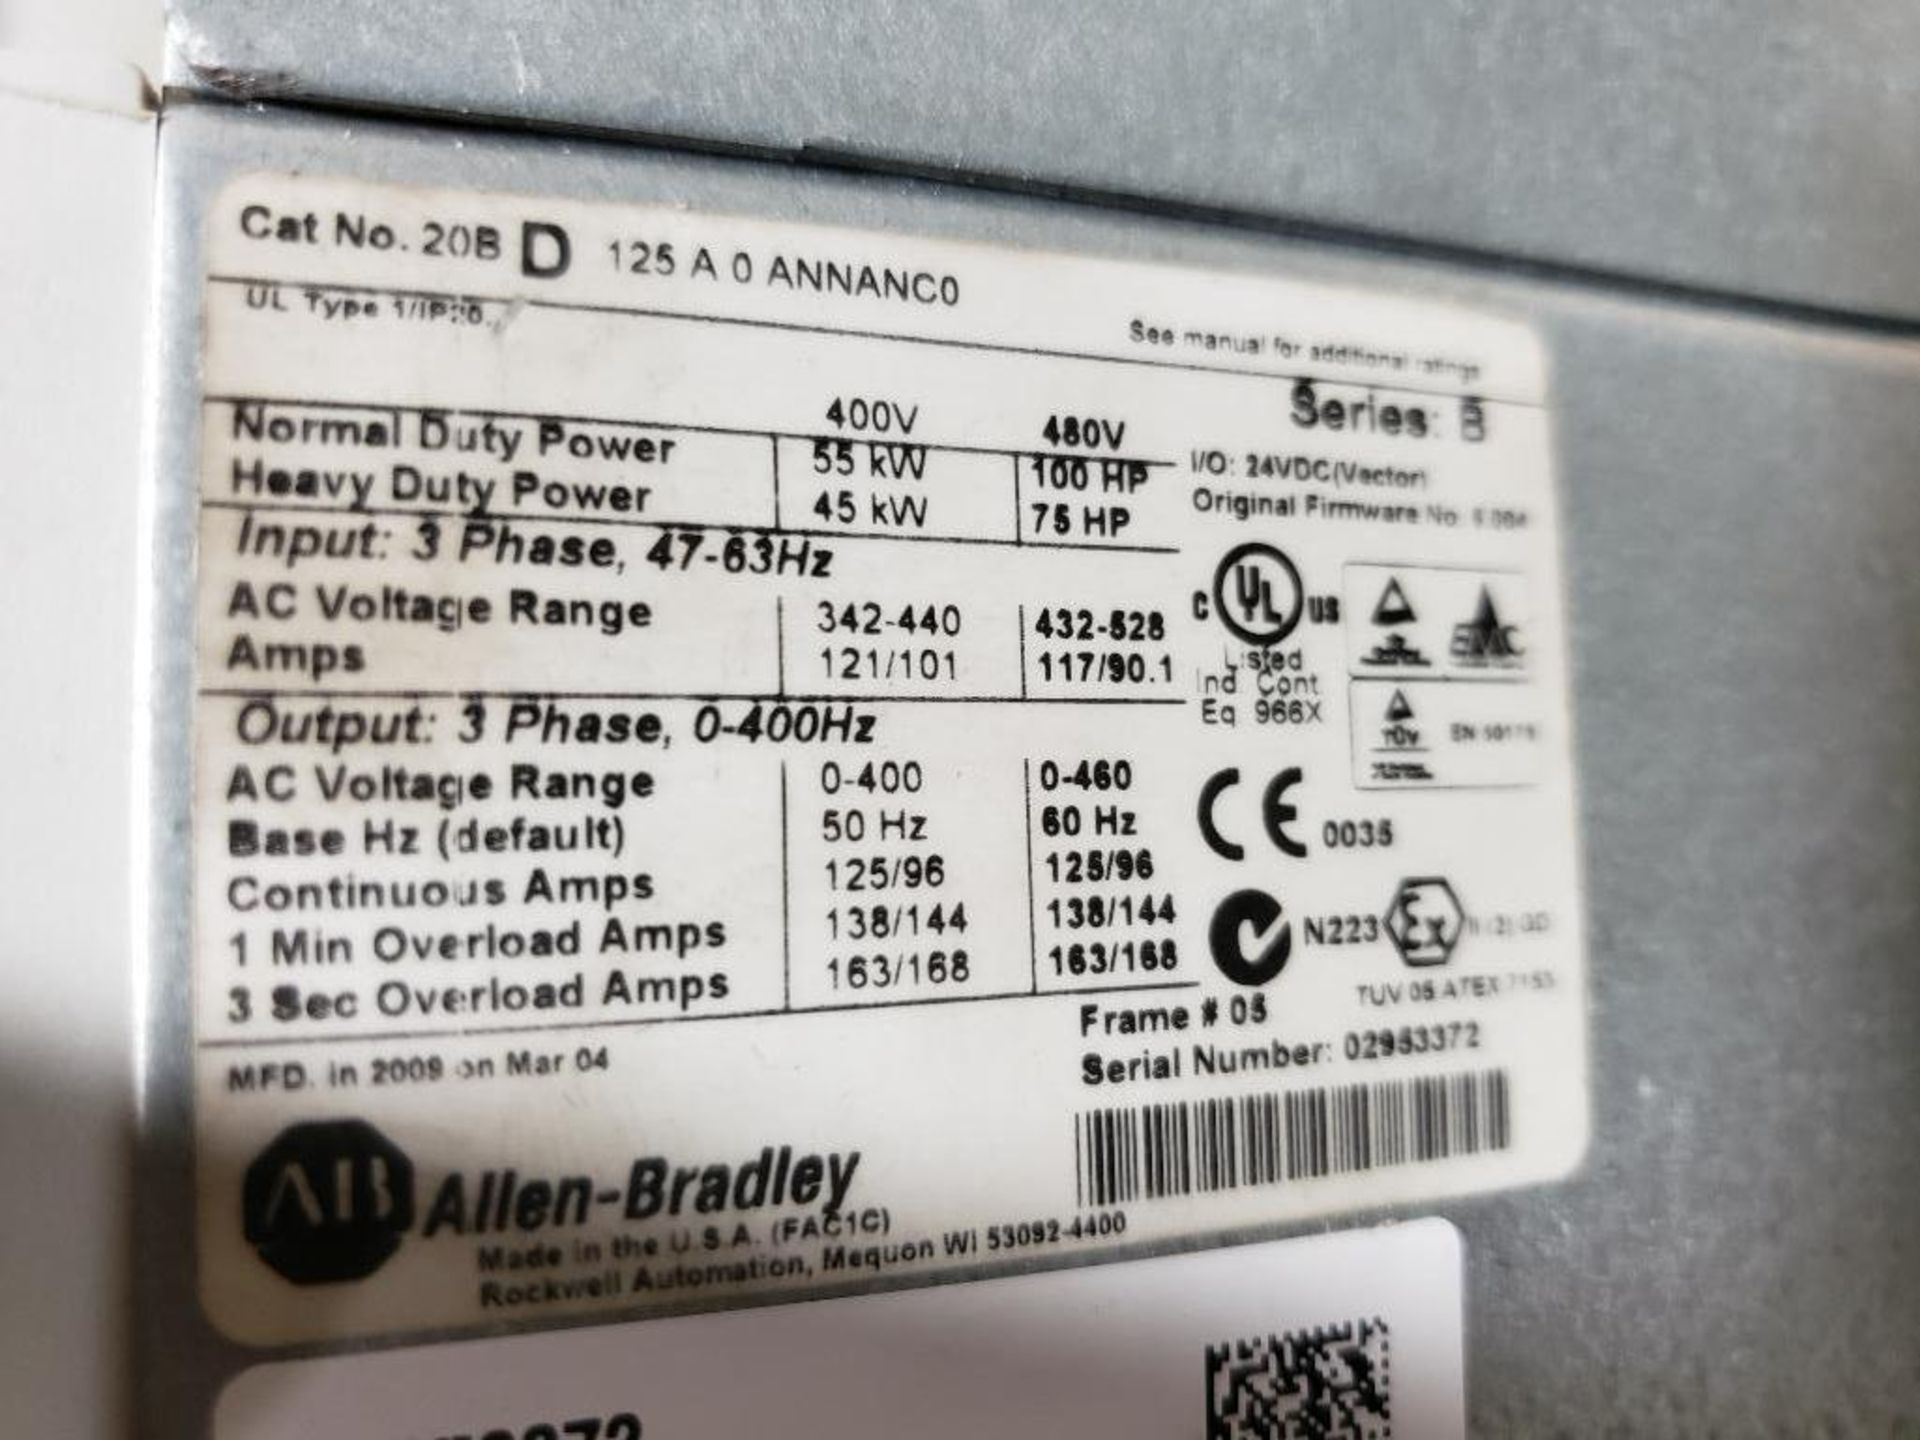 100hp Allen Bradley Powerflex 700 drive. Catalog 20B-D-125-A-0-ANNANC0. New on factory pallet/box. - Image 5 of 7